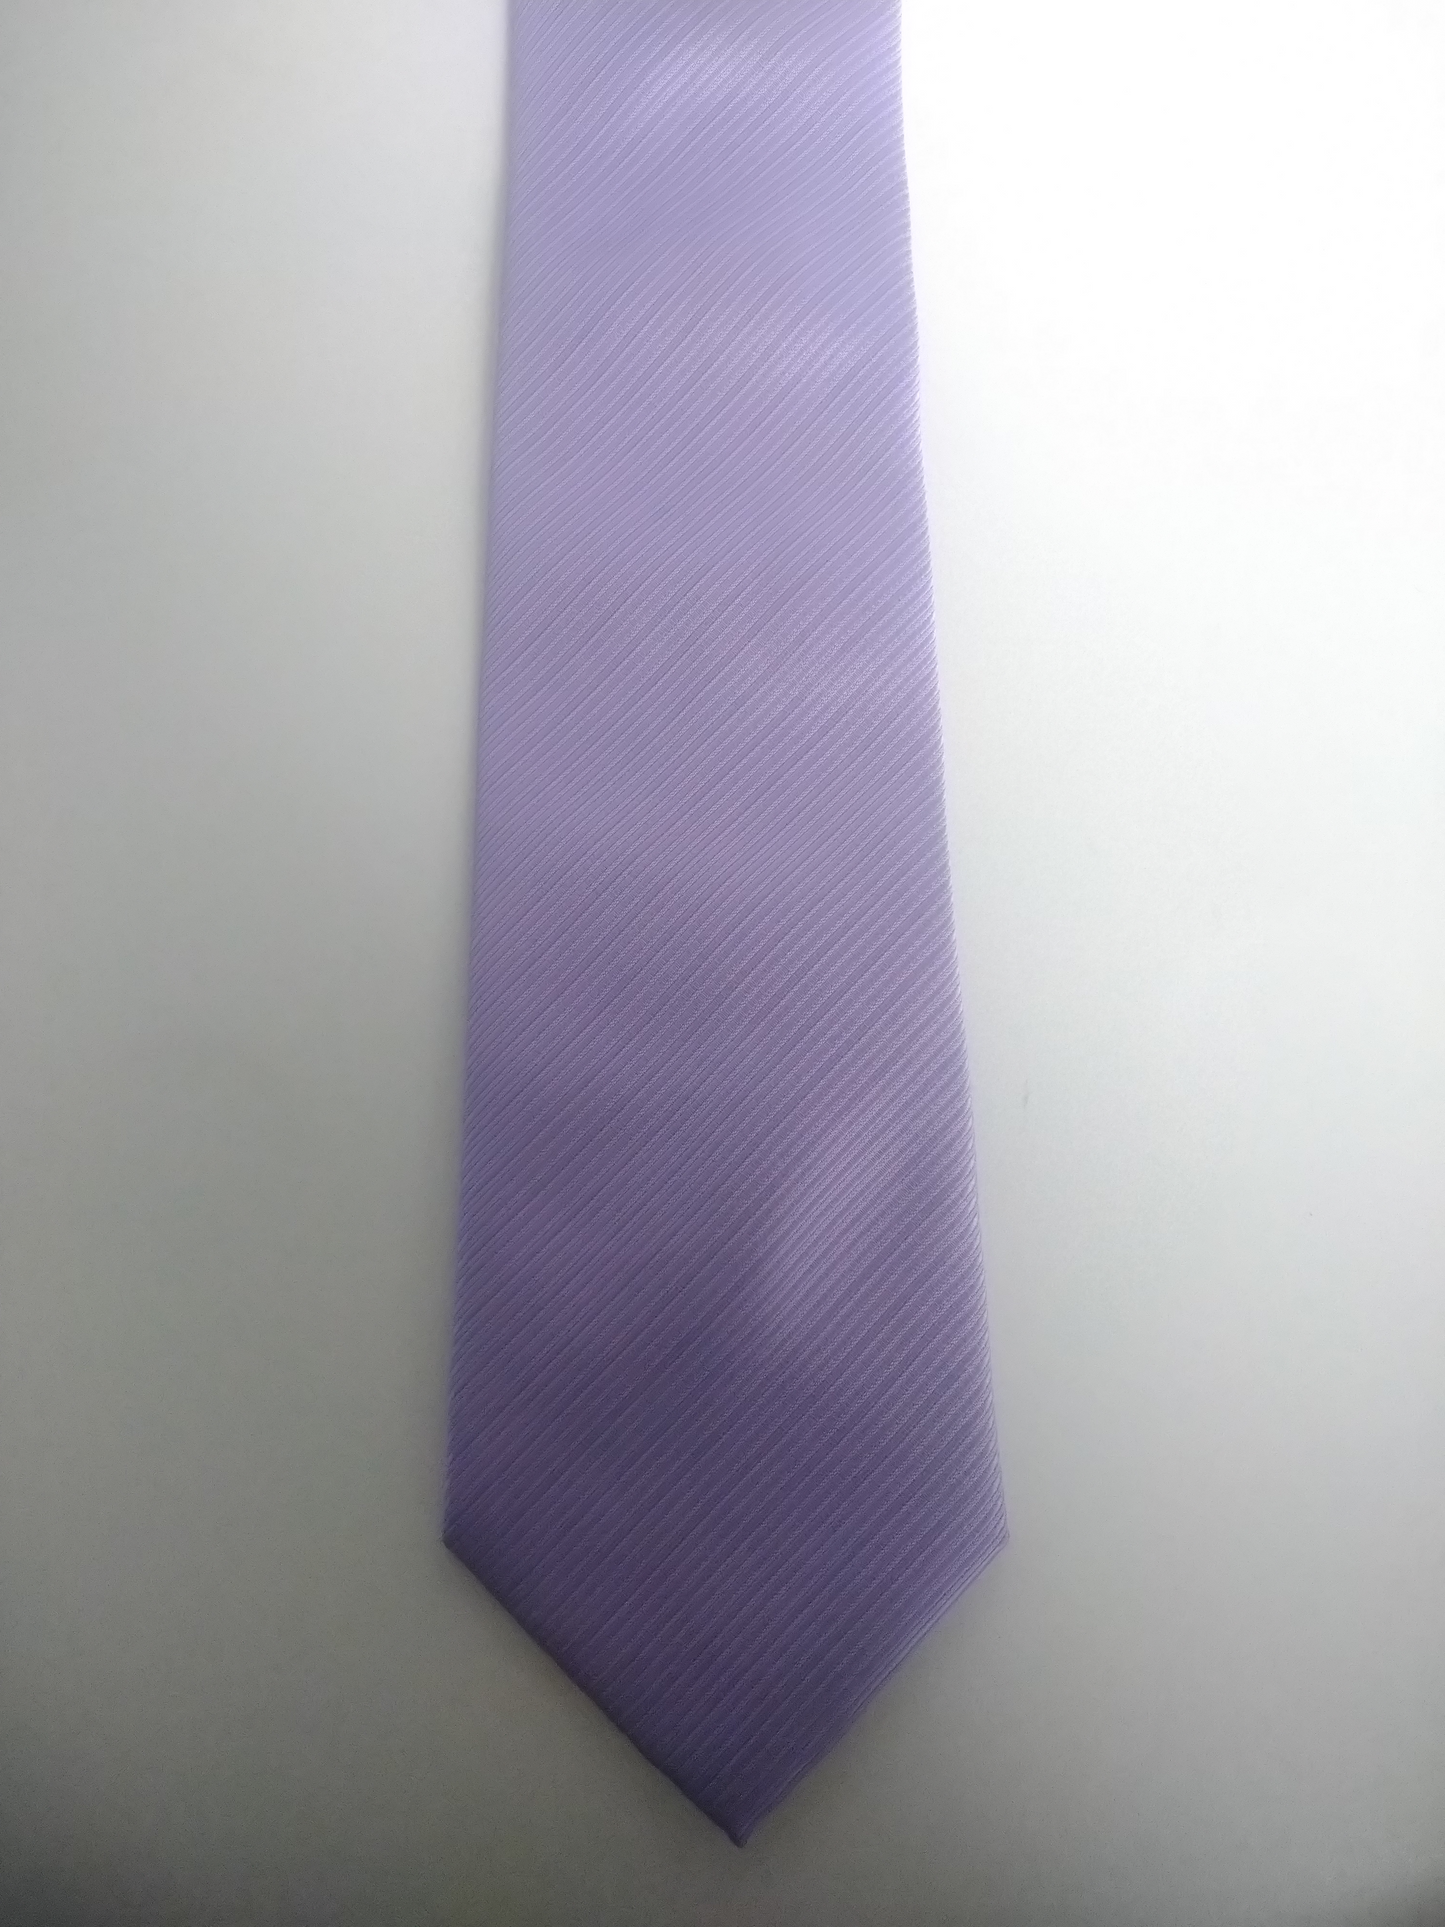 Vintage Canda tie. Purple striped. Polyester.